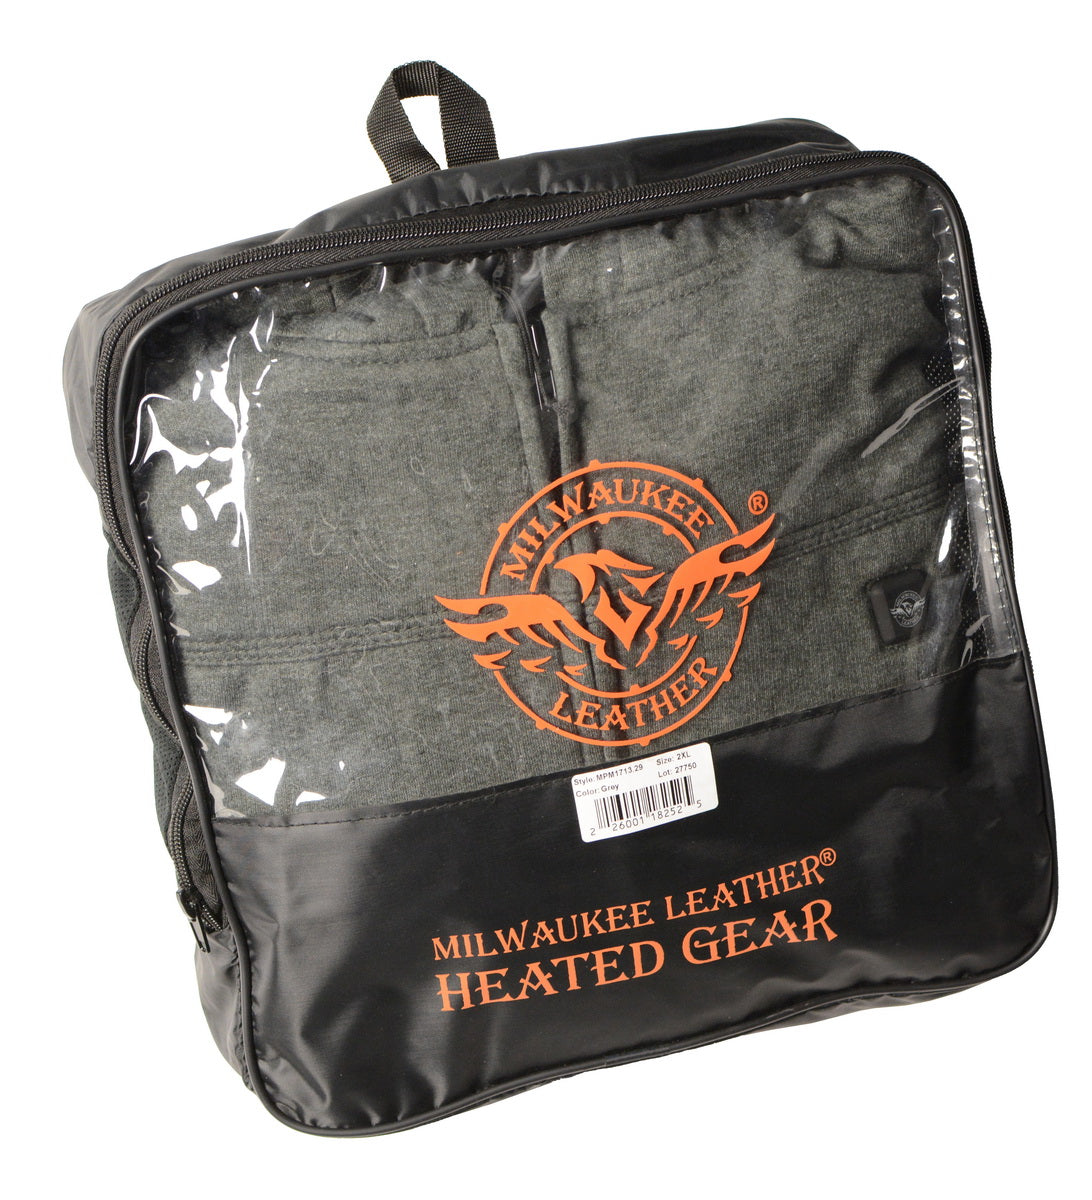 Nexgen Heat MPM1762SET Men’s Soft Shell Heated Jacket - Black Standup Collar Jacket for Winter with Battery Pack